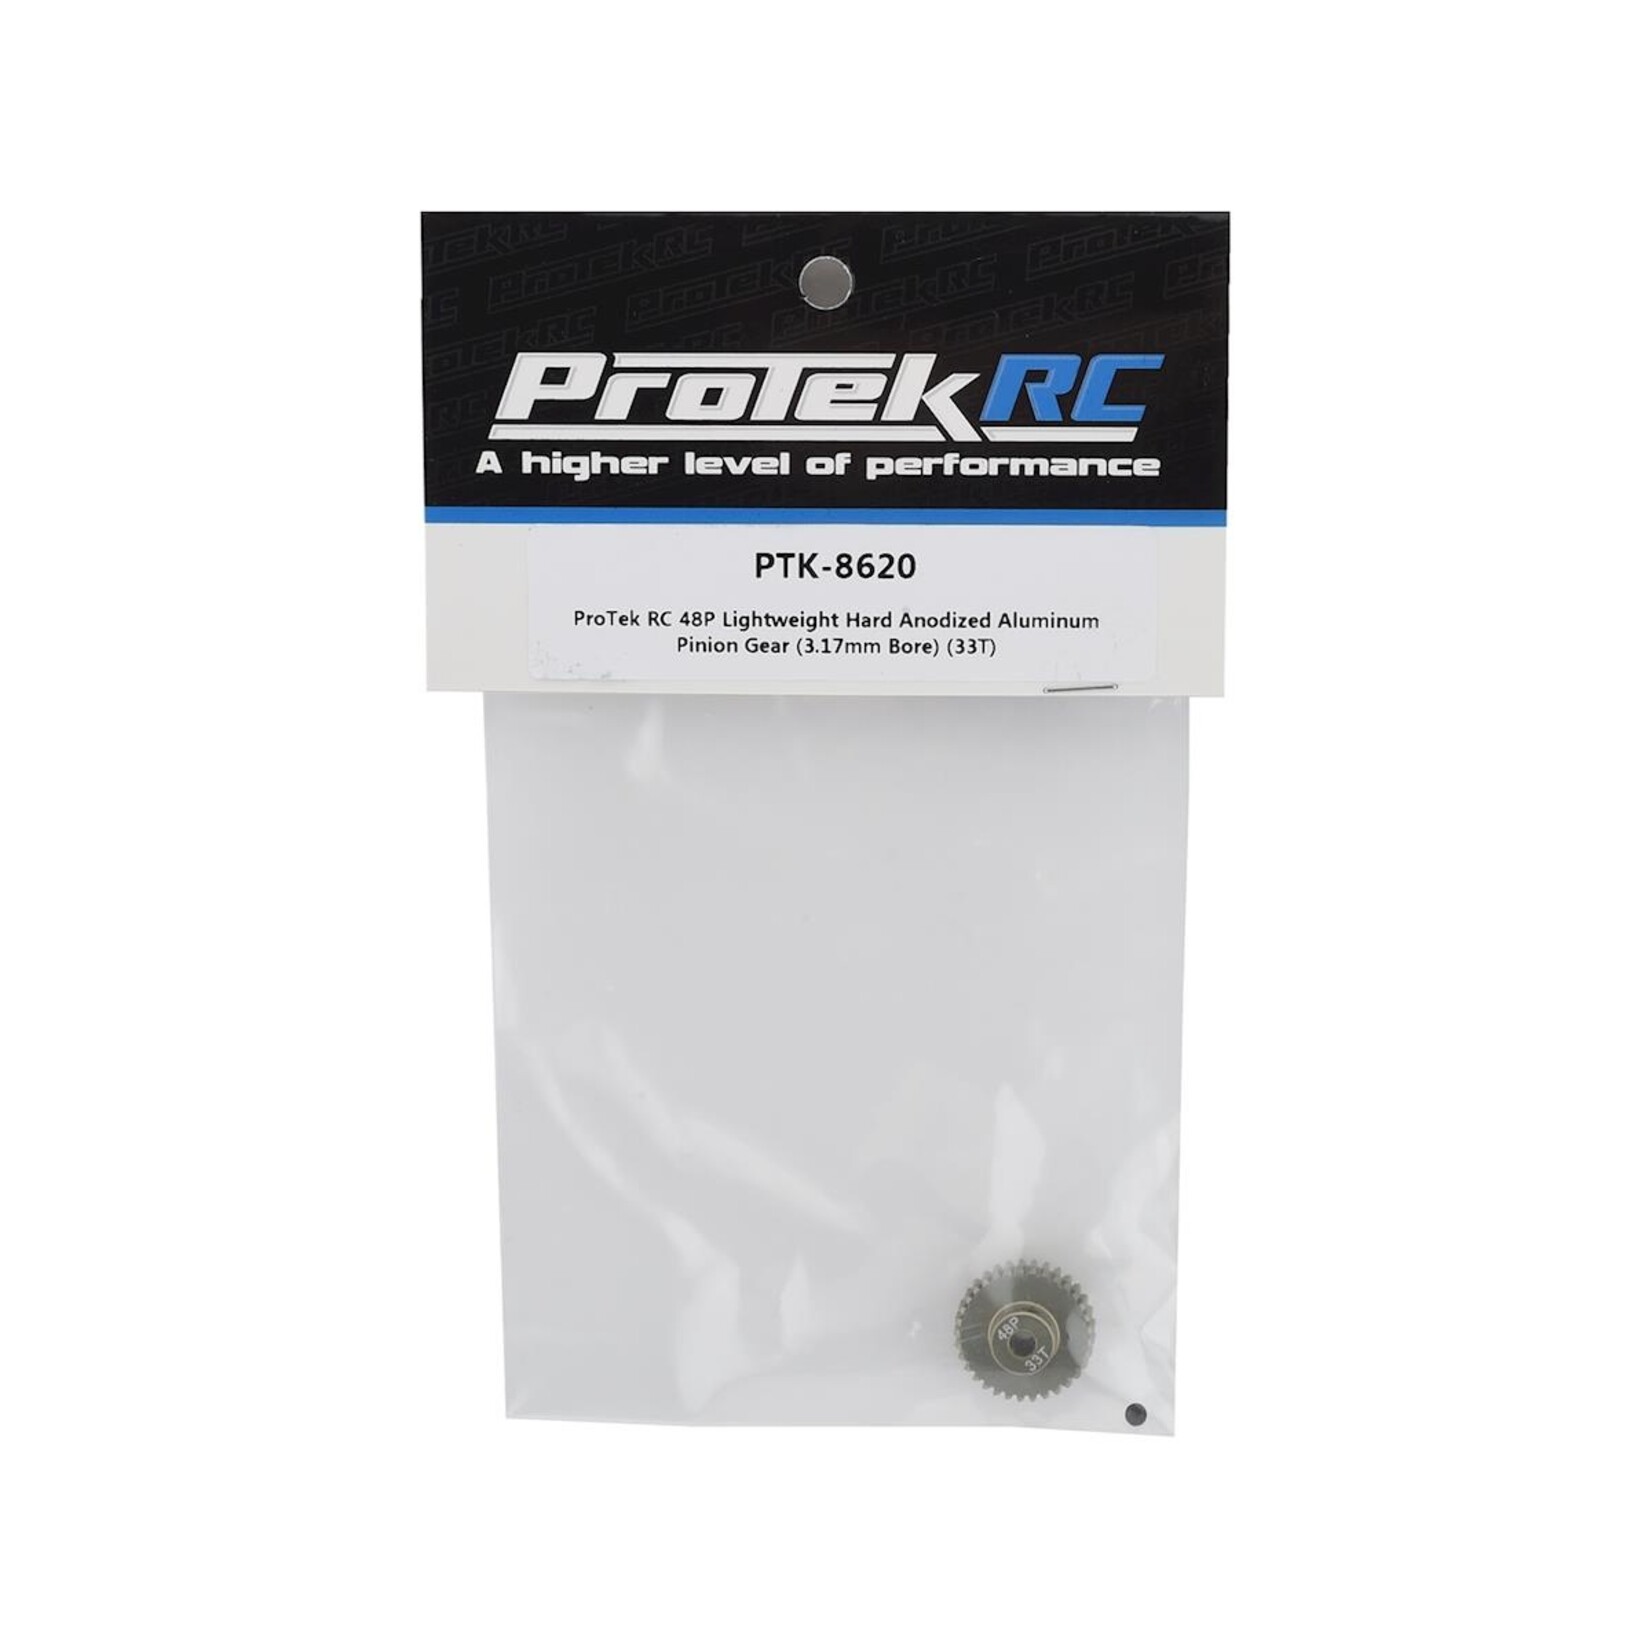 ProTek RC ProTek RC 48P Lightweight Hard Anodized Aluminum Pinion Gear (3.17mm Bore) (33T) #PTK-8620